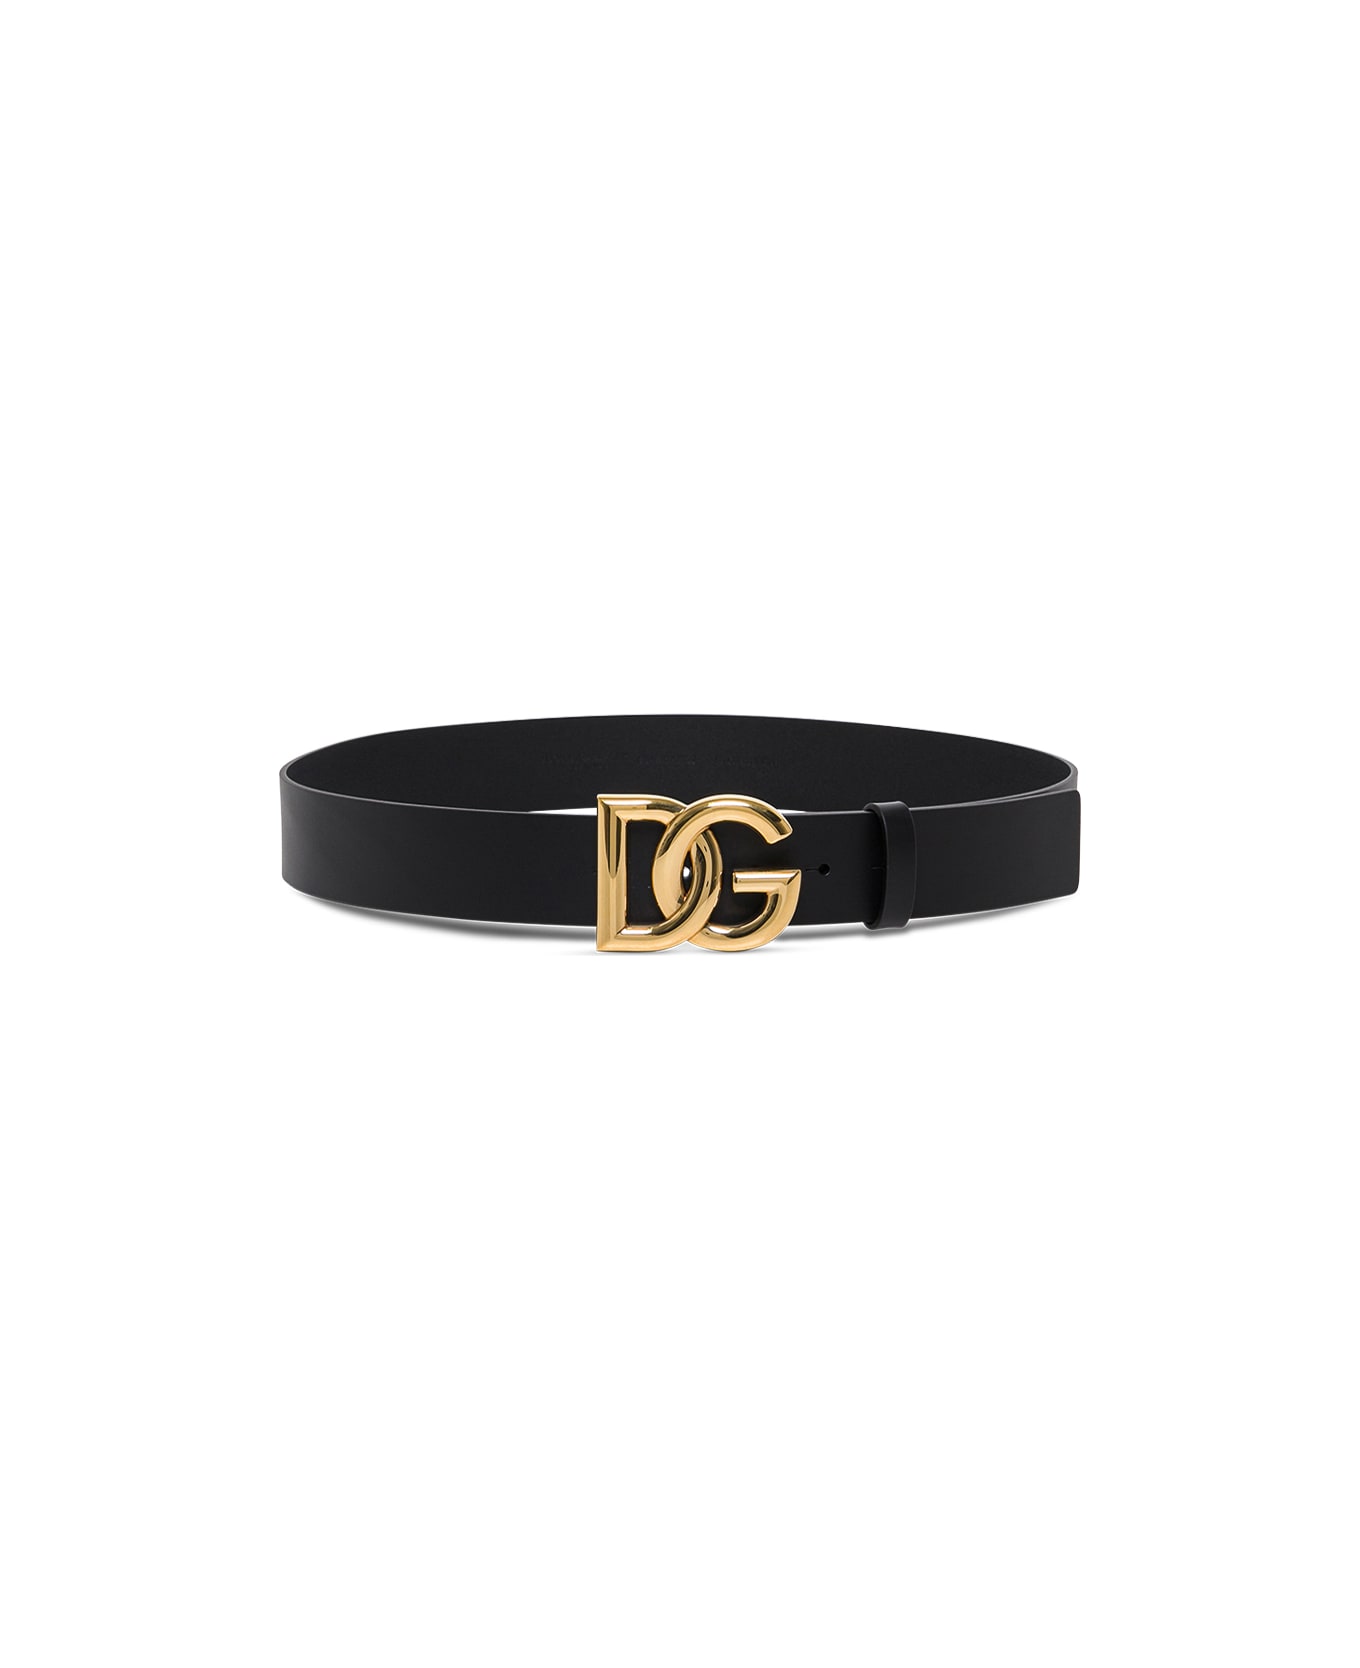 Dolce & Gabbana Black Leather Belt With Logo Buckle - Black